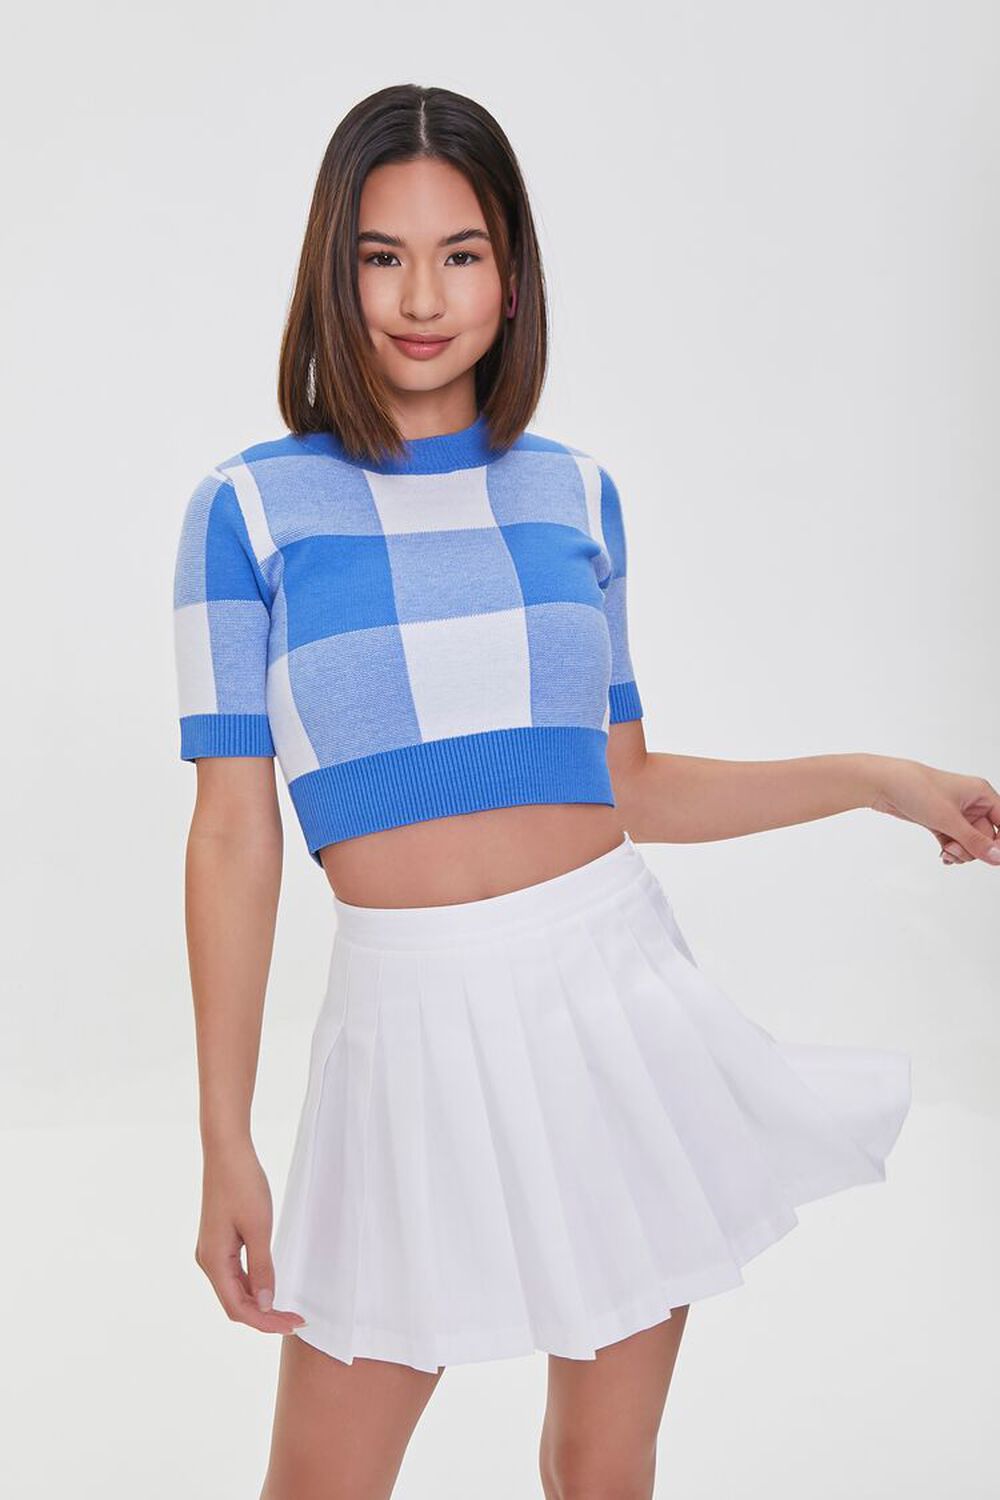 WHITE Pleated Mini Skirt, image 1